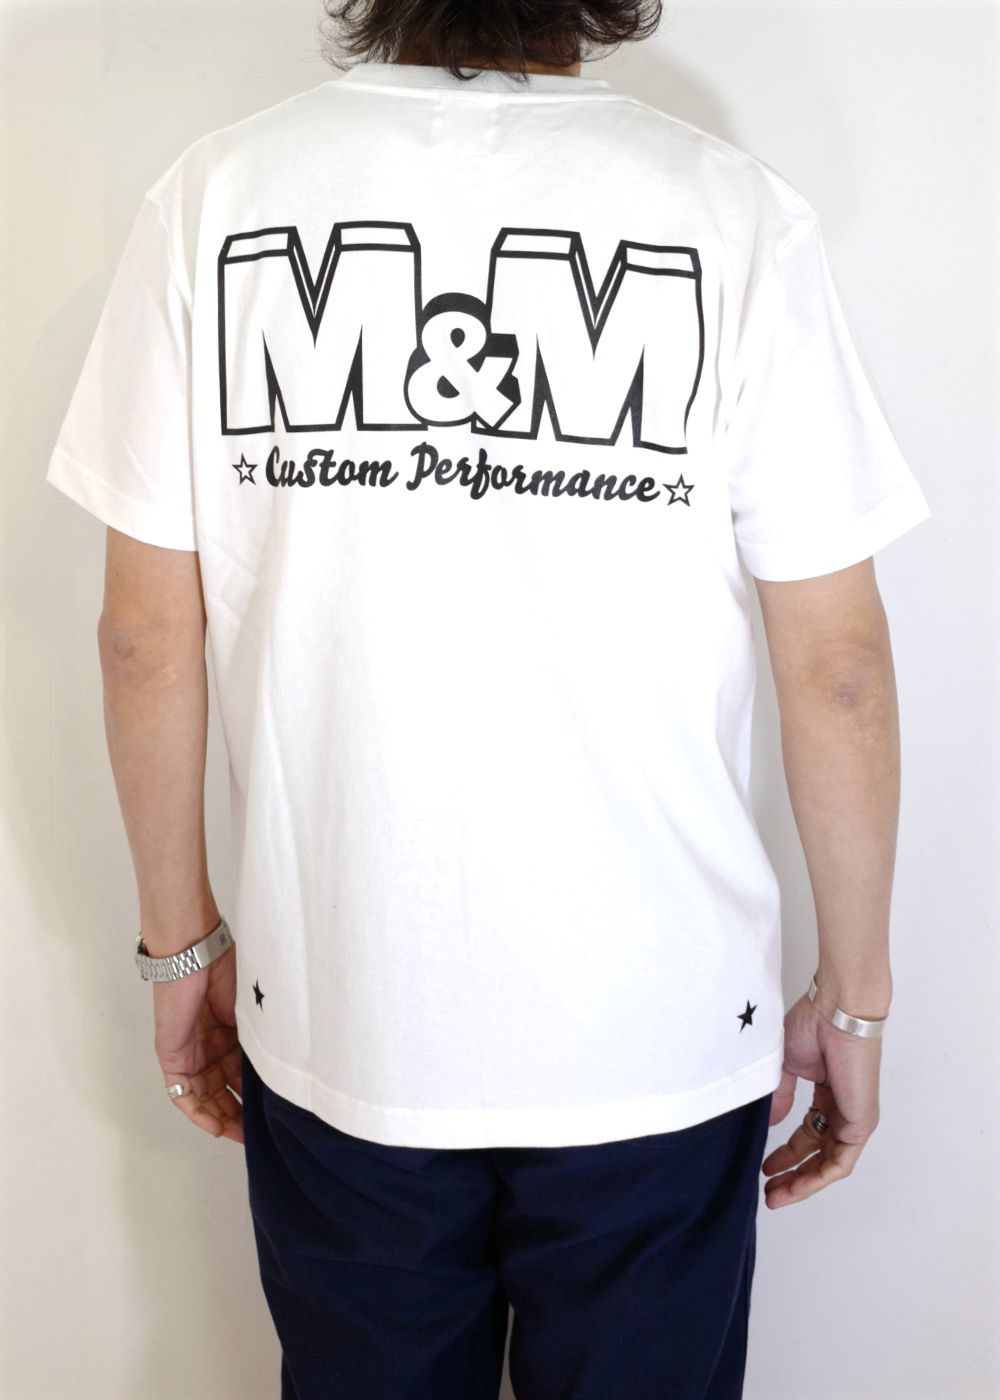 mm custom performance 初期 スター フットボールシャツ - Tシャツ